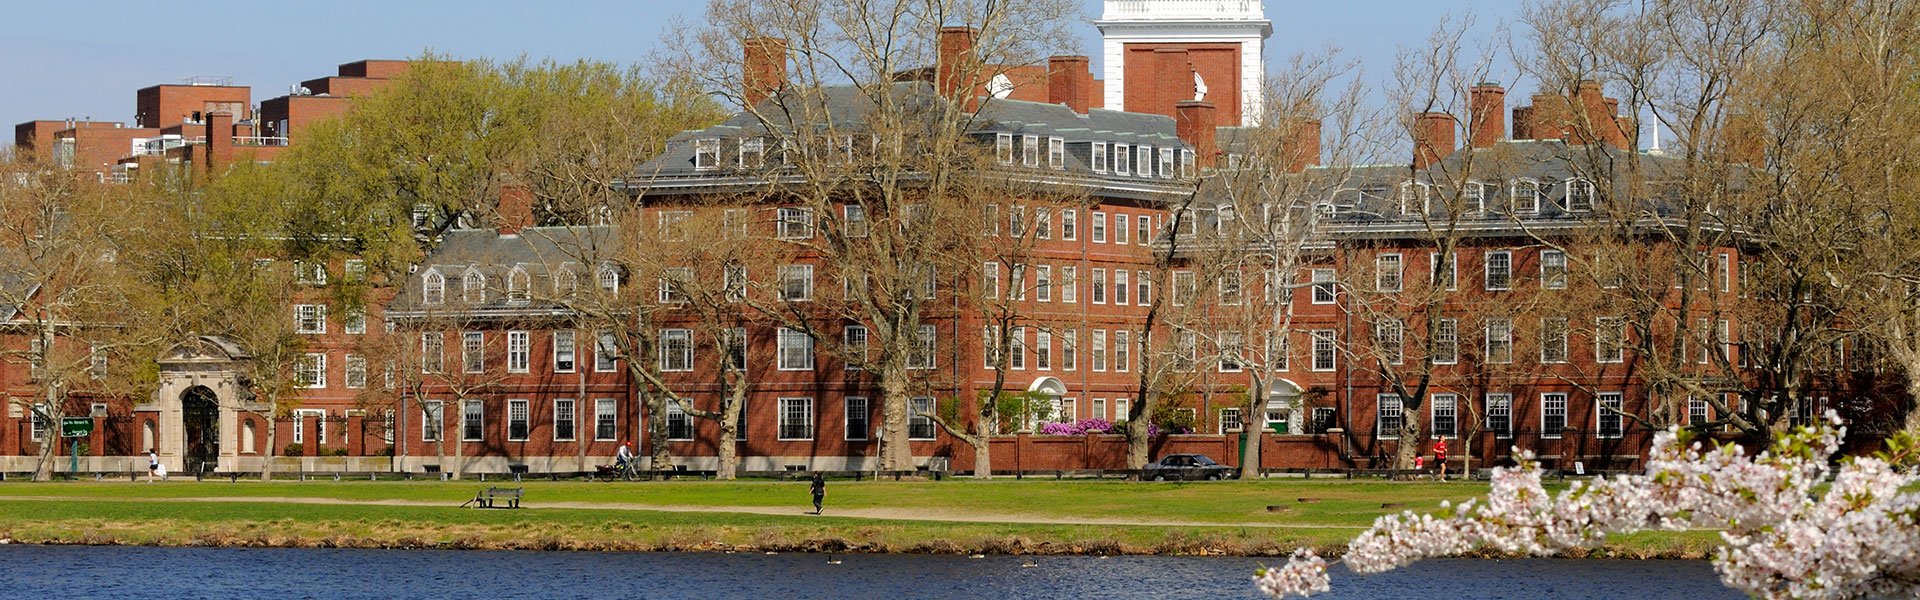 boston college visit hotel